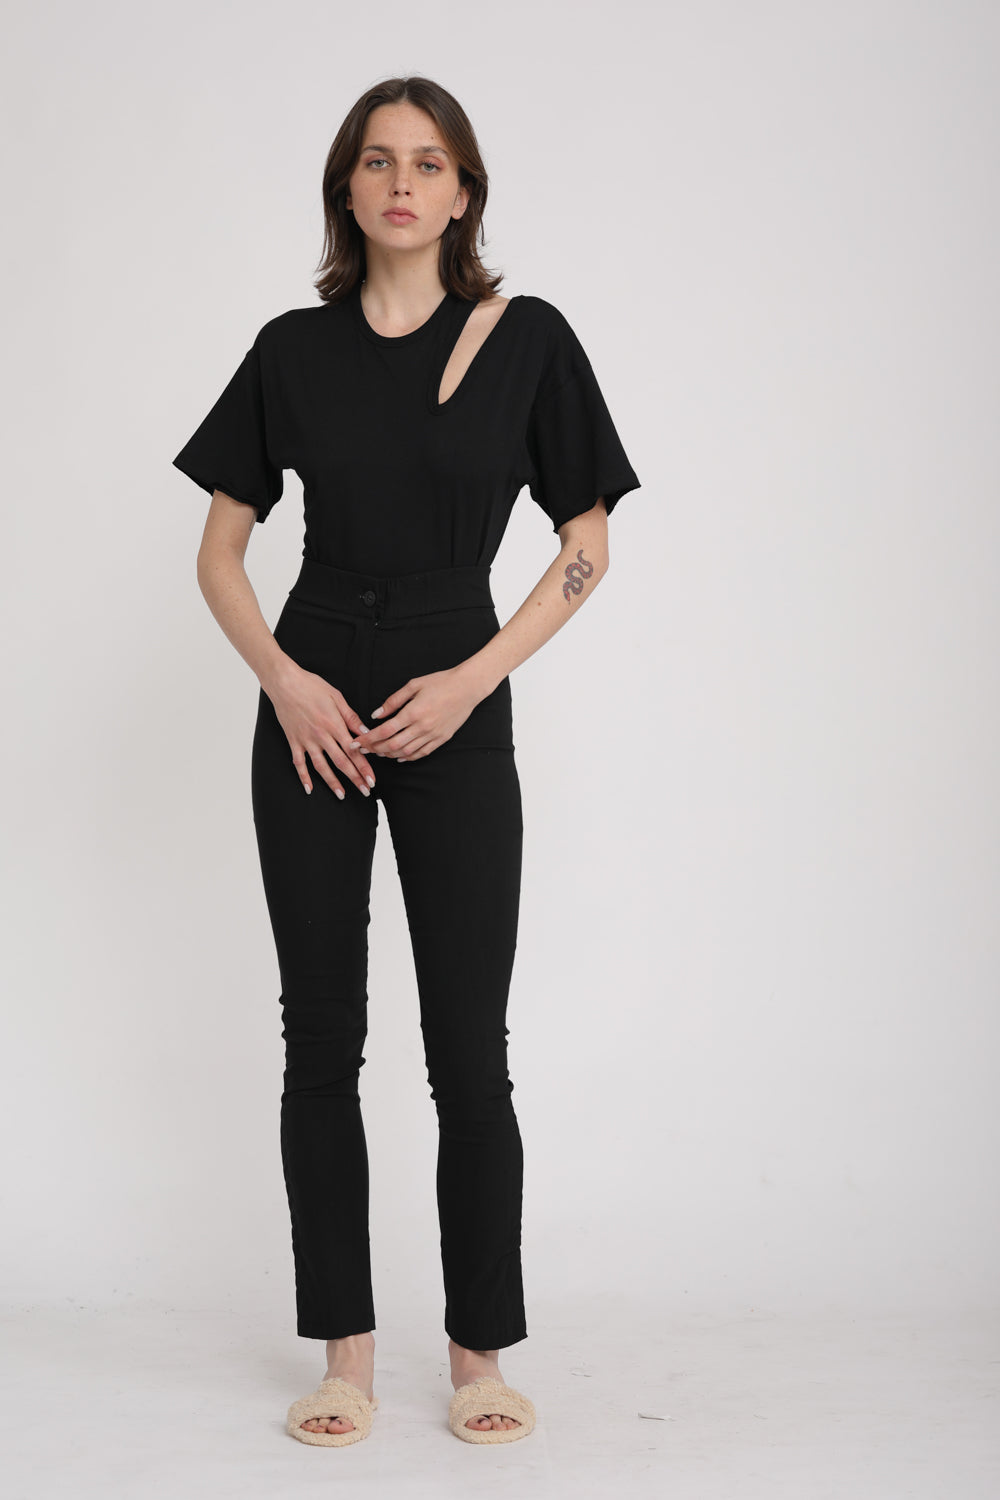 Swan T-Shirt Black Bodysuit